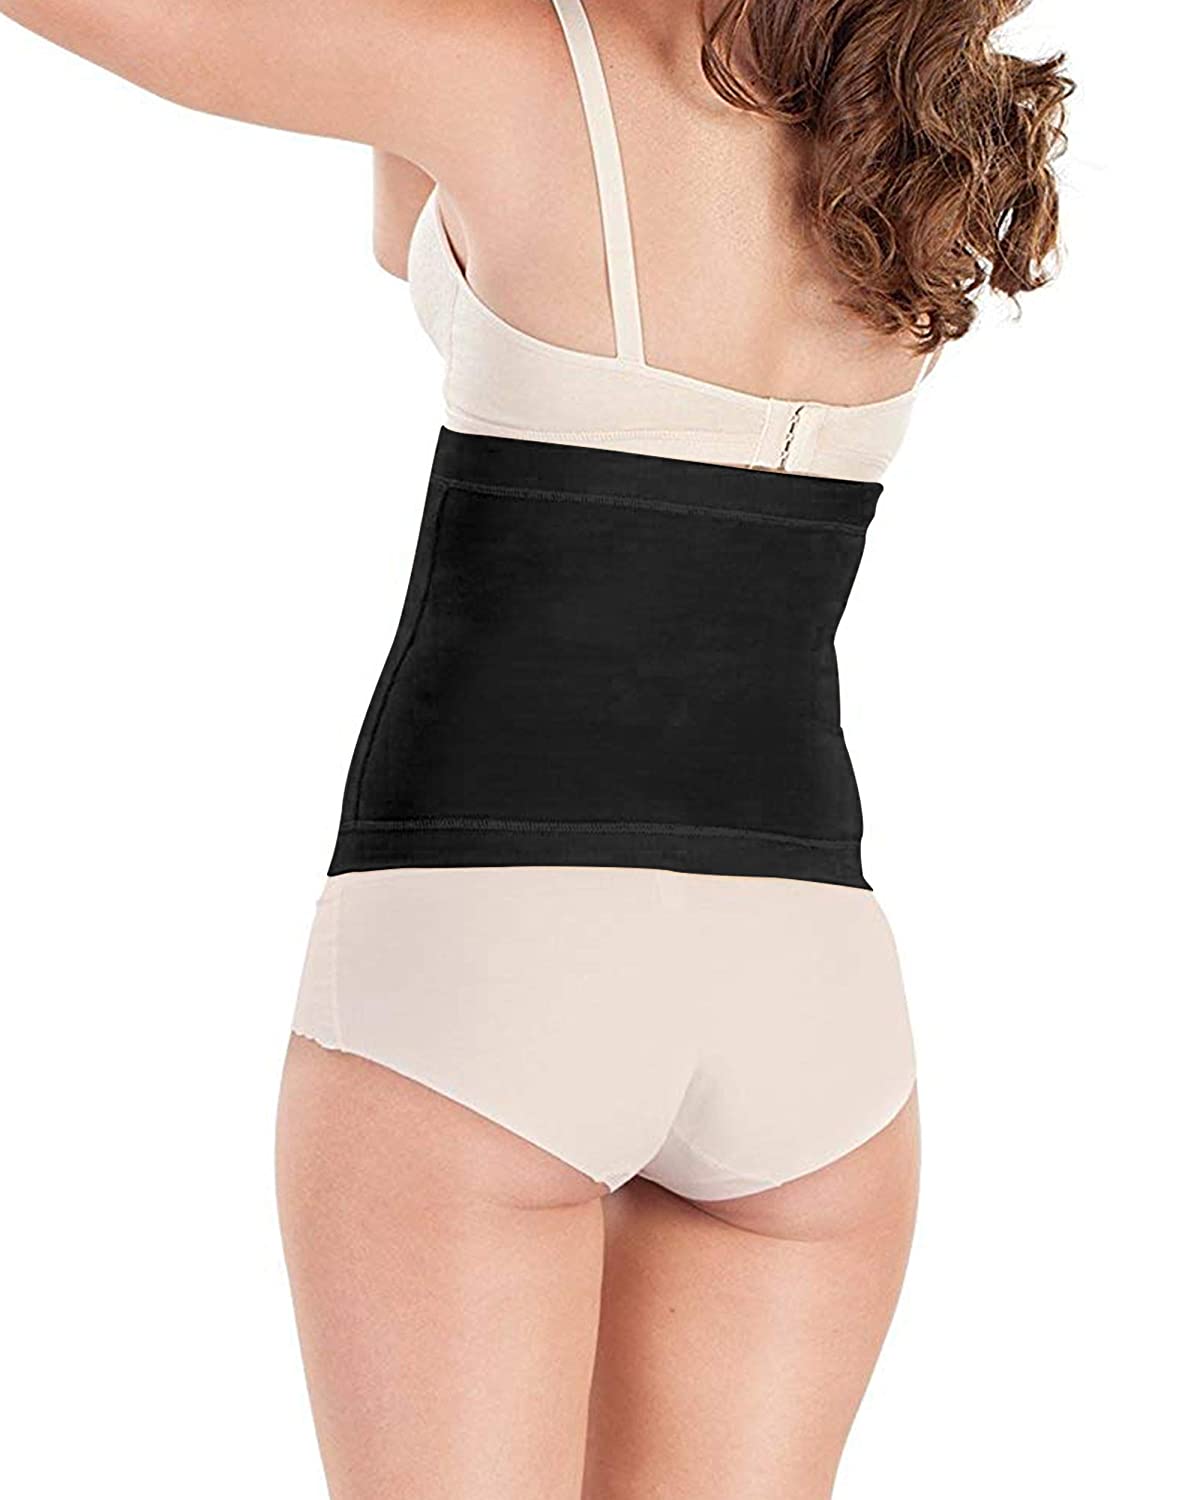 https://naricomfortwear.com/wp-content/uploads/2021/02/Nari-Comfort-Wear-3585-Women-Blended-Body-Waist-Shaper-Tummy-Tucker-Belt-4-Bk.jpg